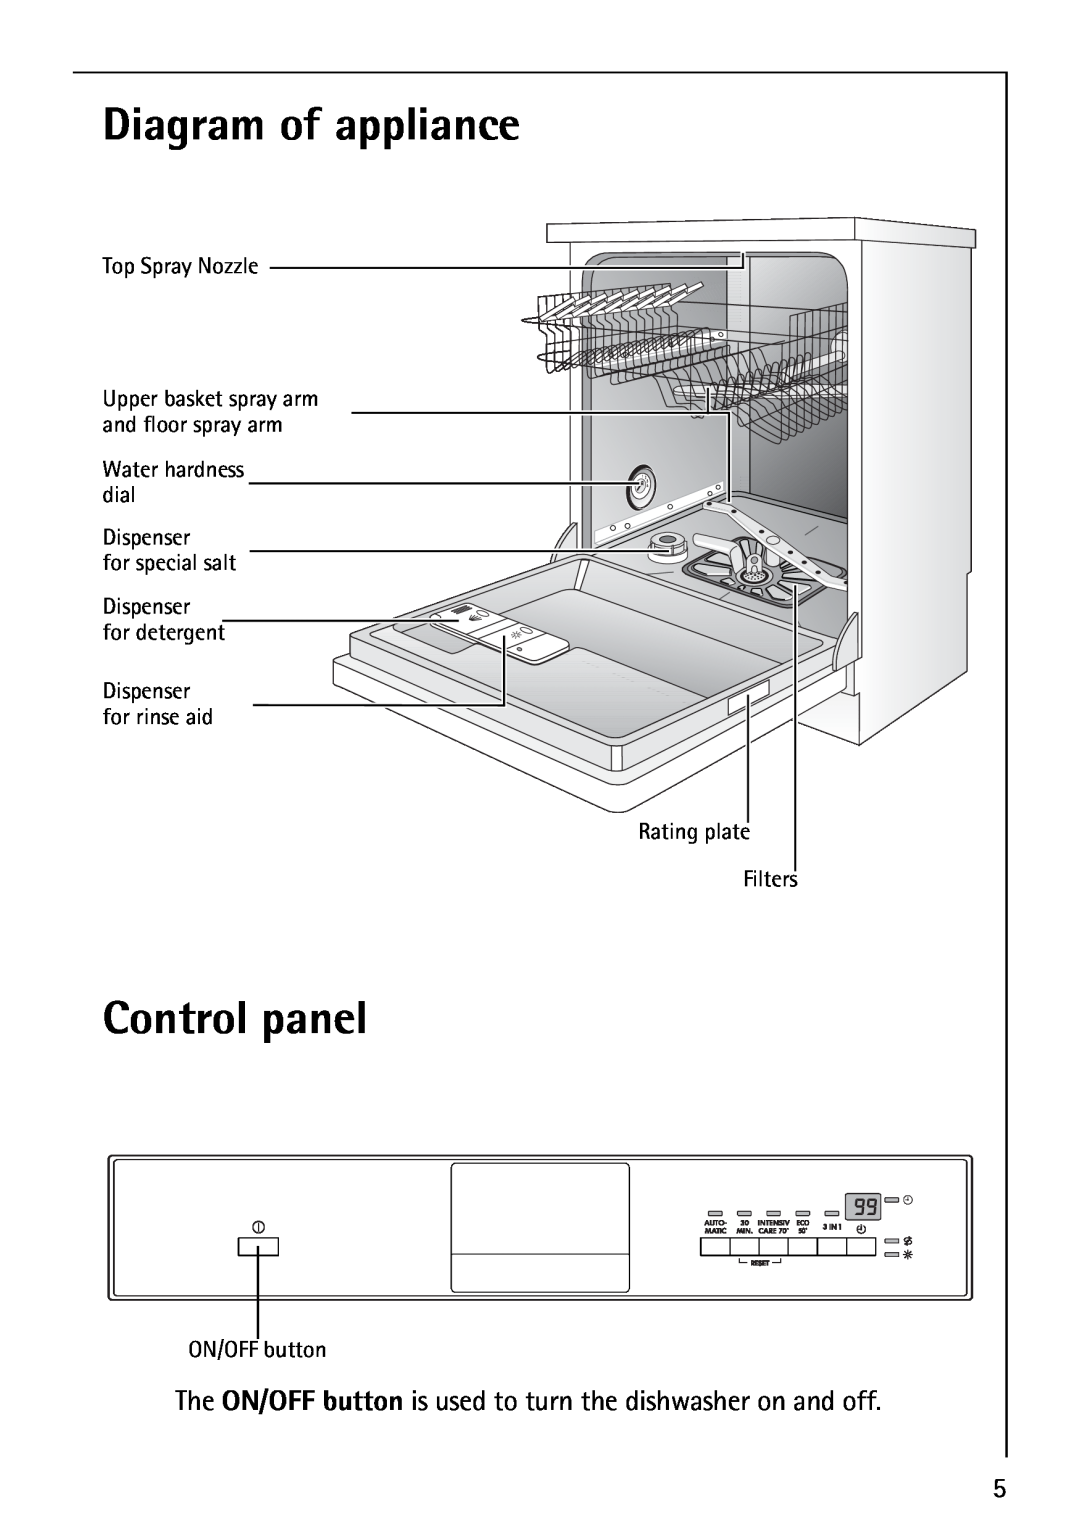 AEG 40860 manual Diagram of appliance, Control panel 